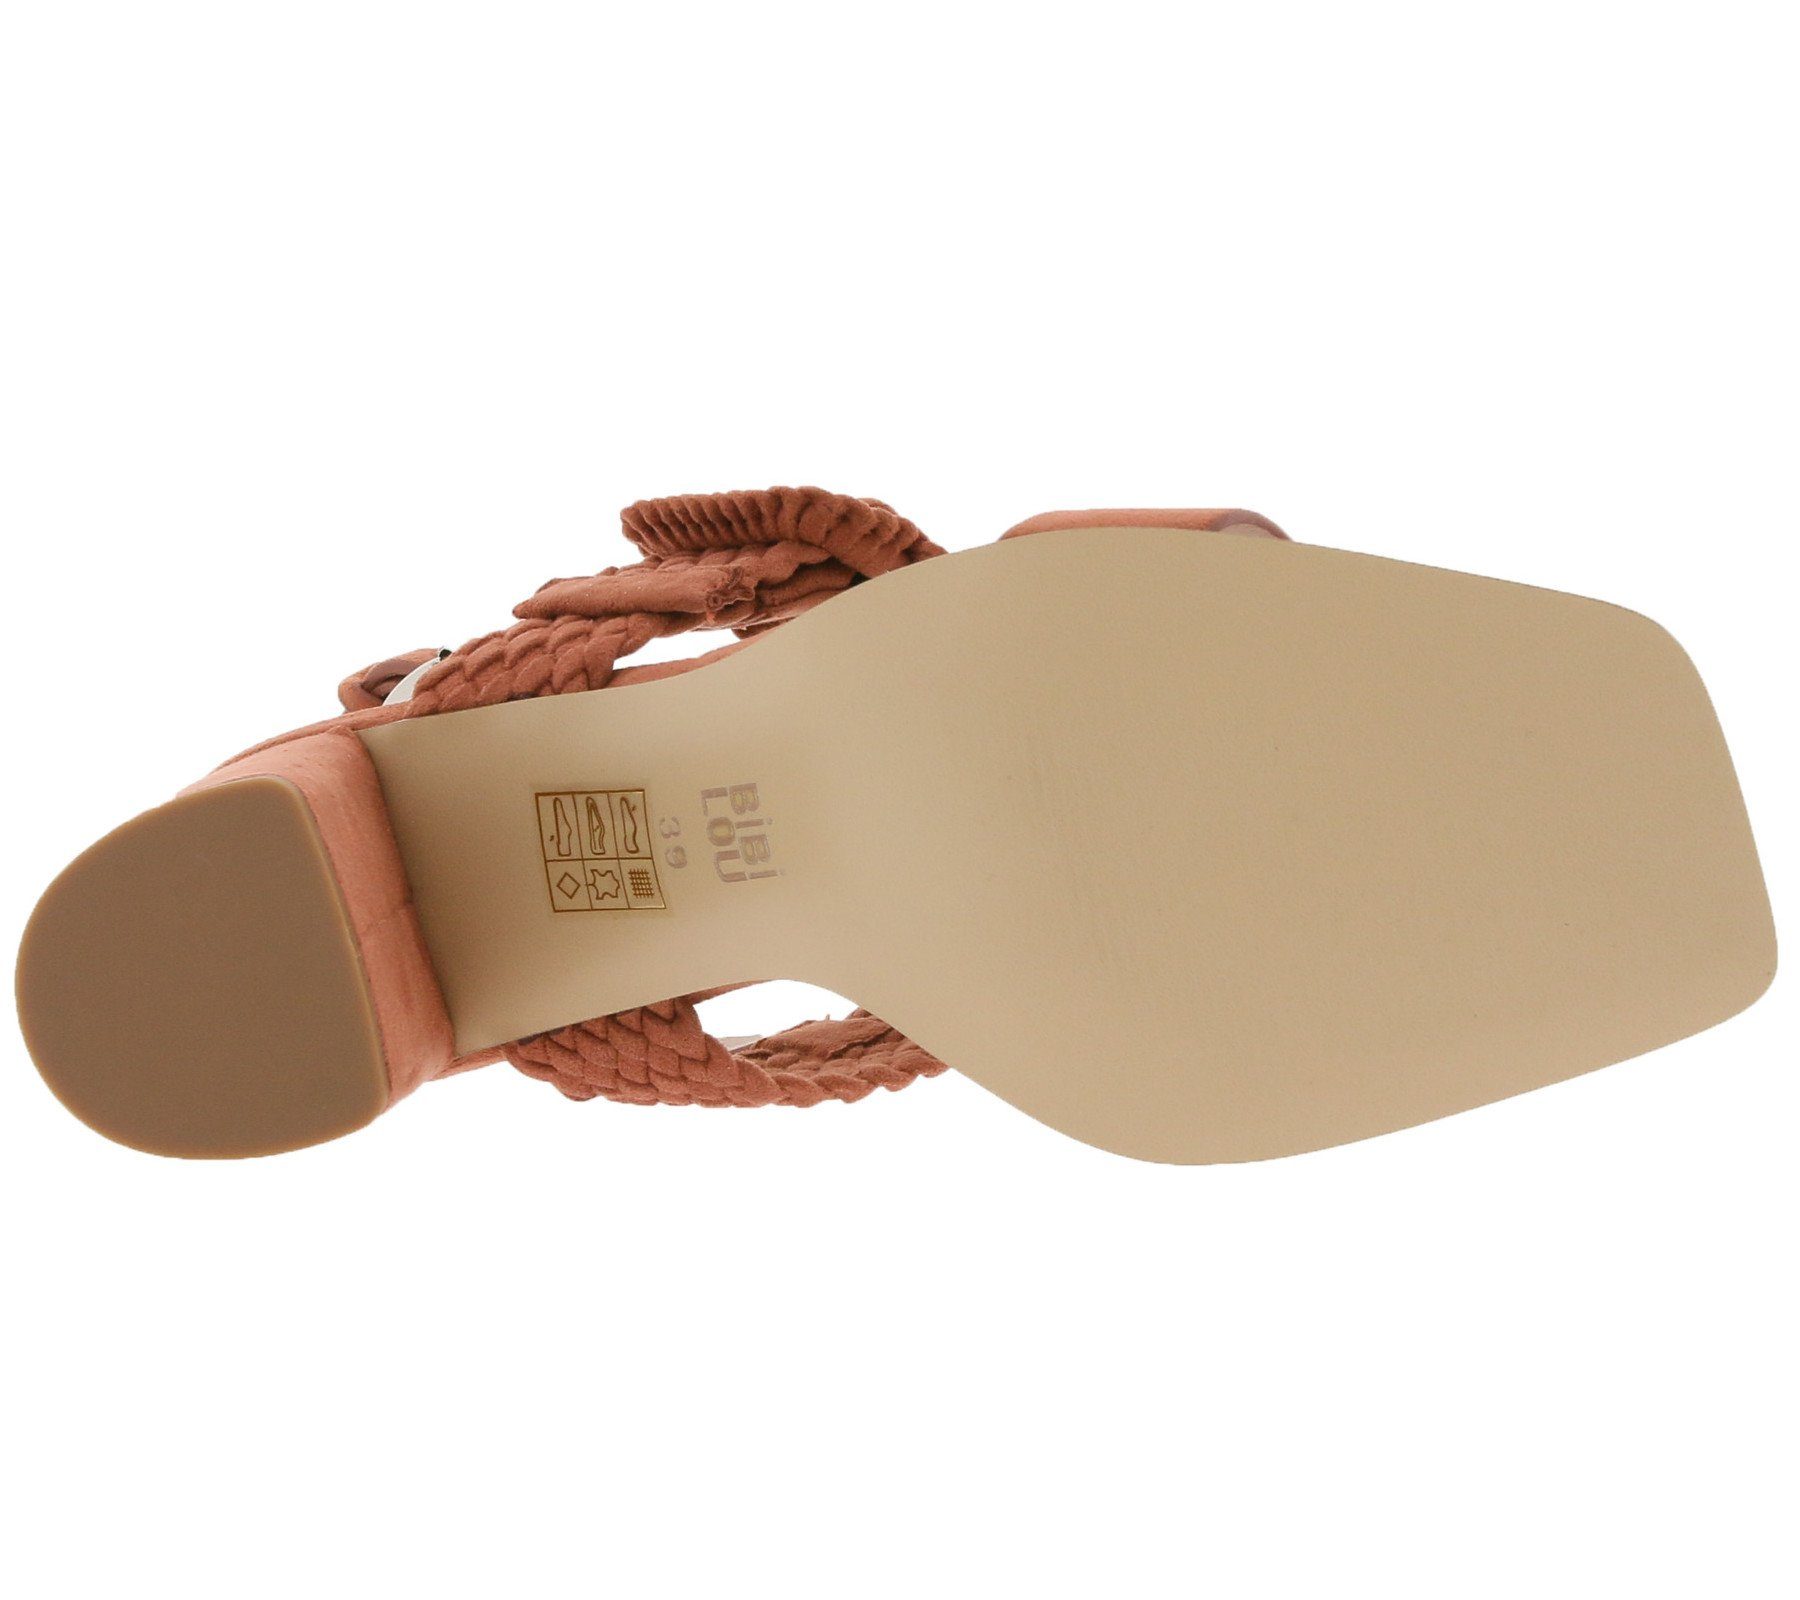 Bibi Lou BIBI LOU Absatz-Sandalen Dunkelrosa schicke mit Damen Sandalette geflochtenen Outdoorschuh Freizeit-Sandalette Verzierungen